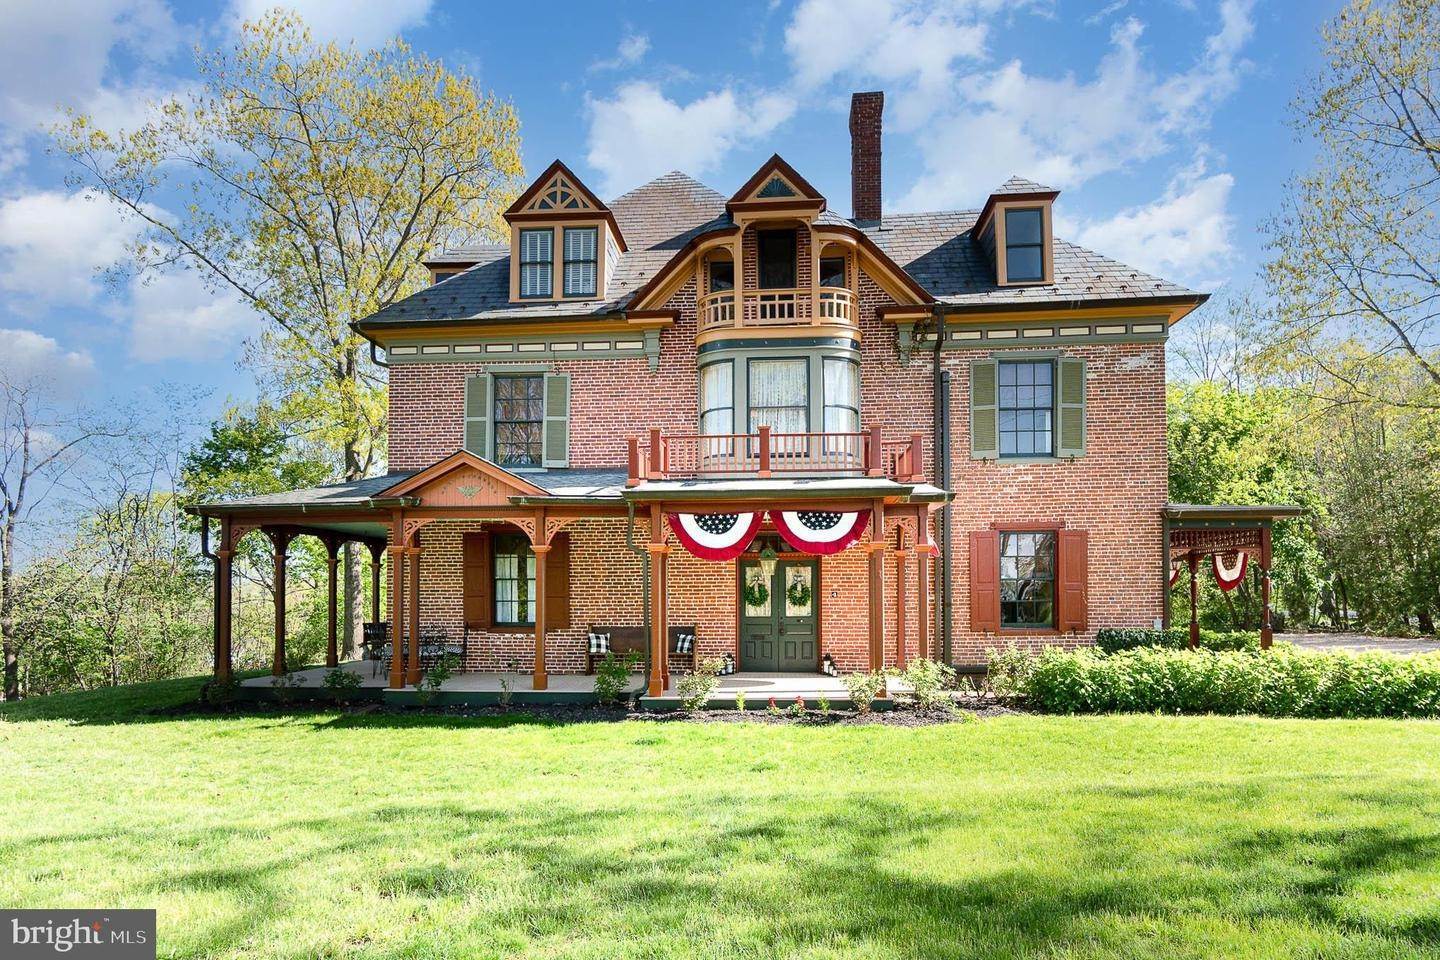 Single Family Homes για την Πώληση στο Gettysburg, Πενσιλβανια 17325 Ηνωμένες Πολιτείες